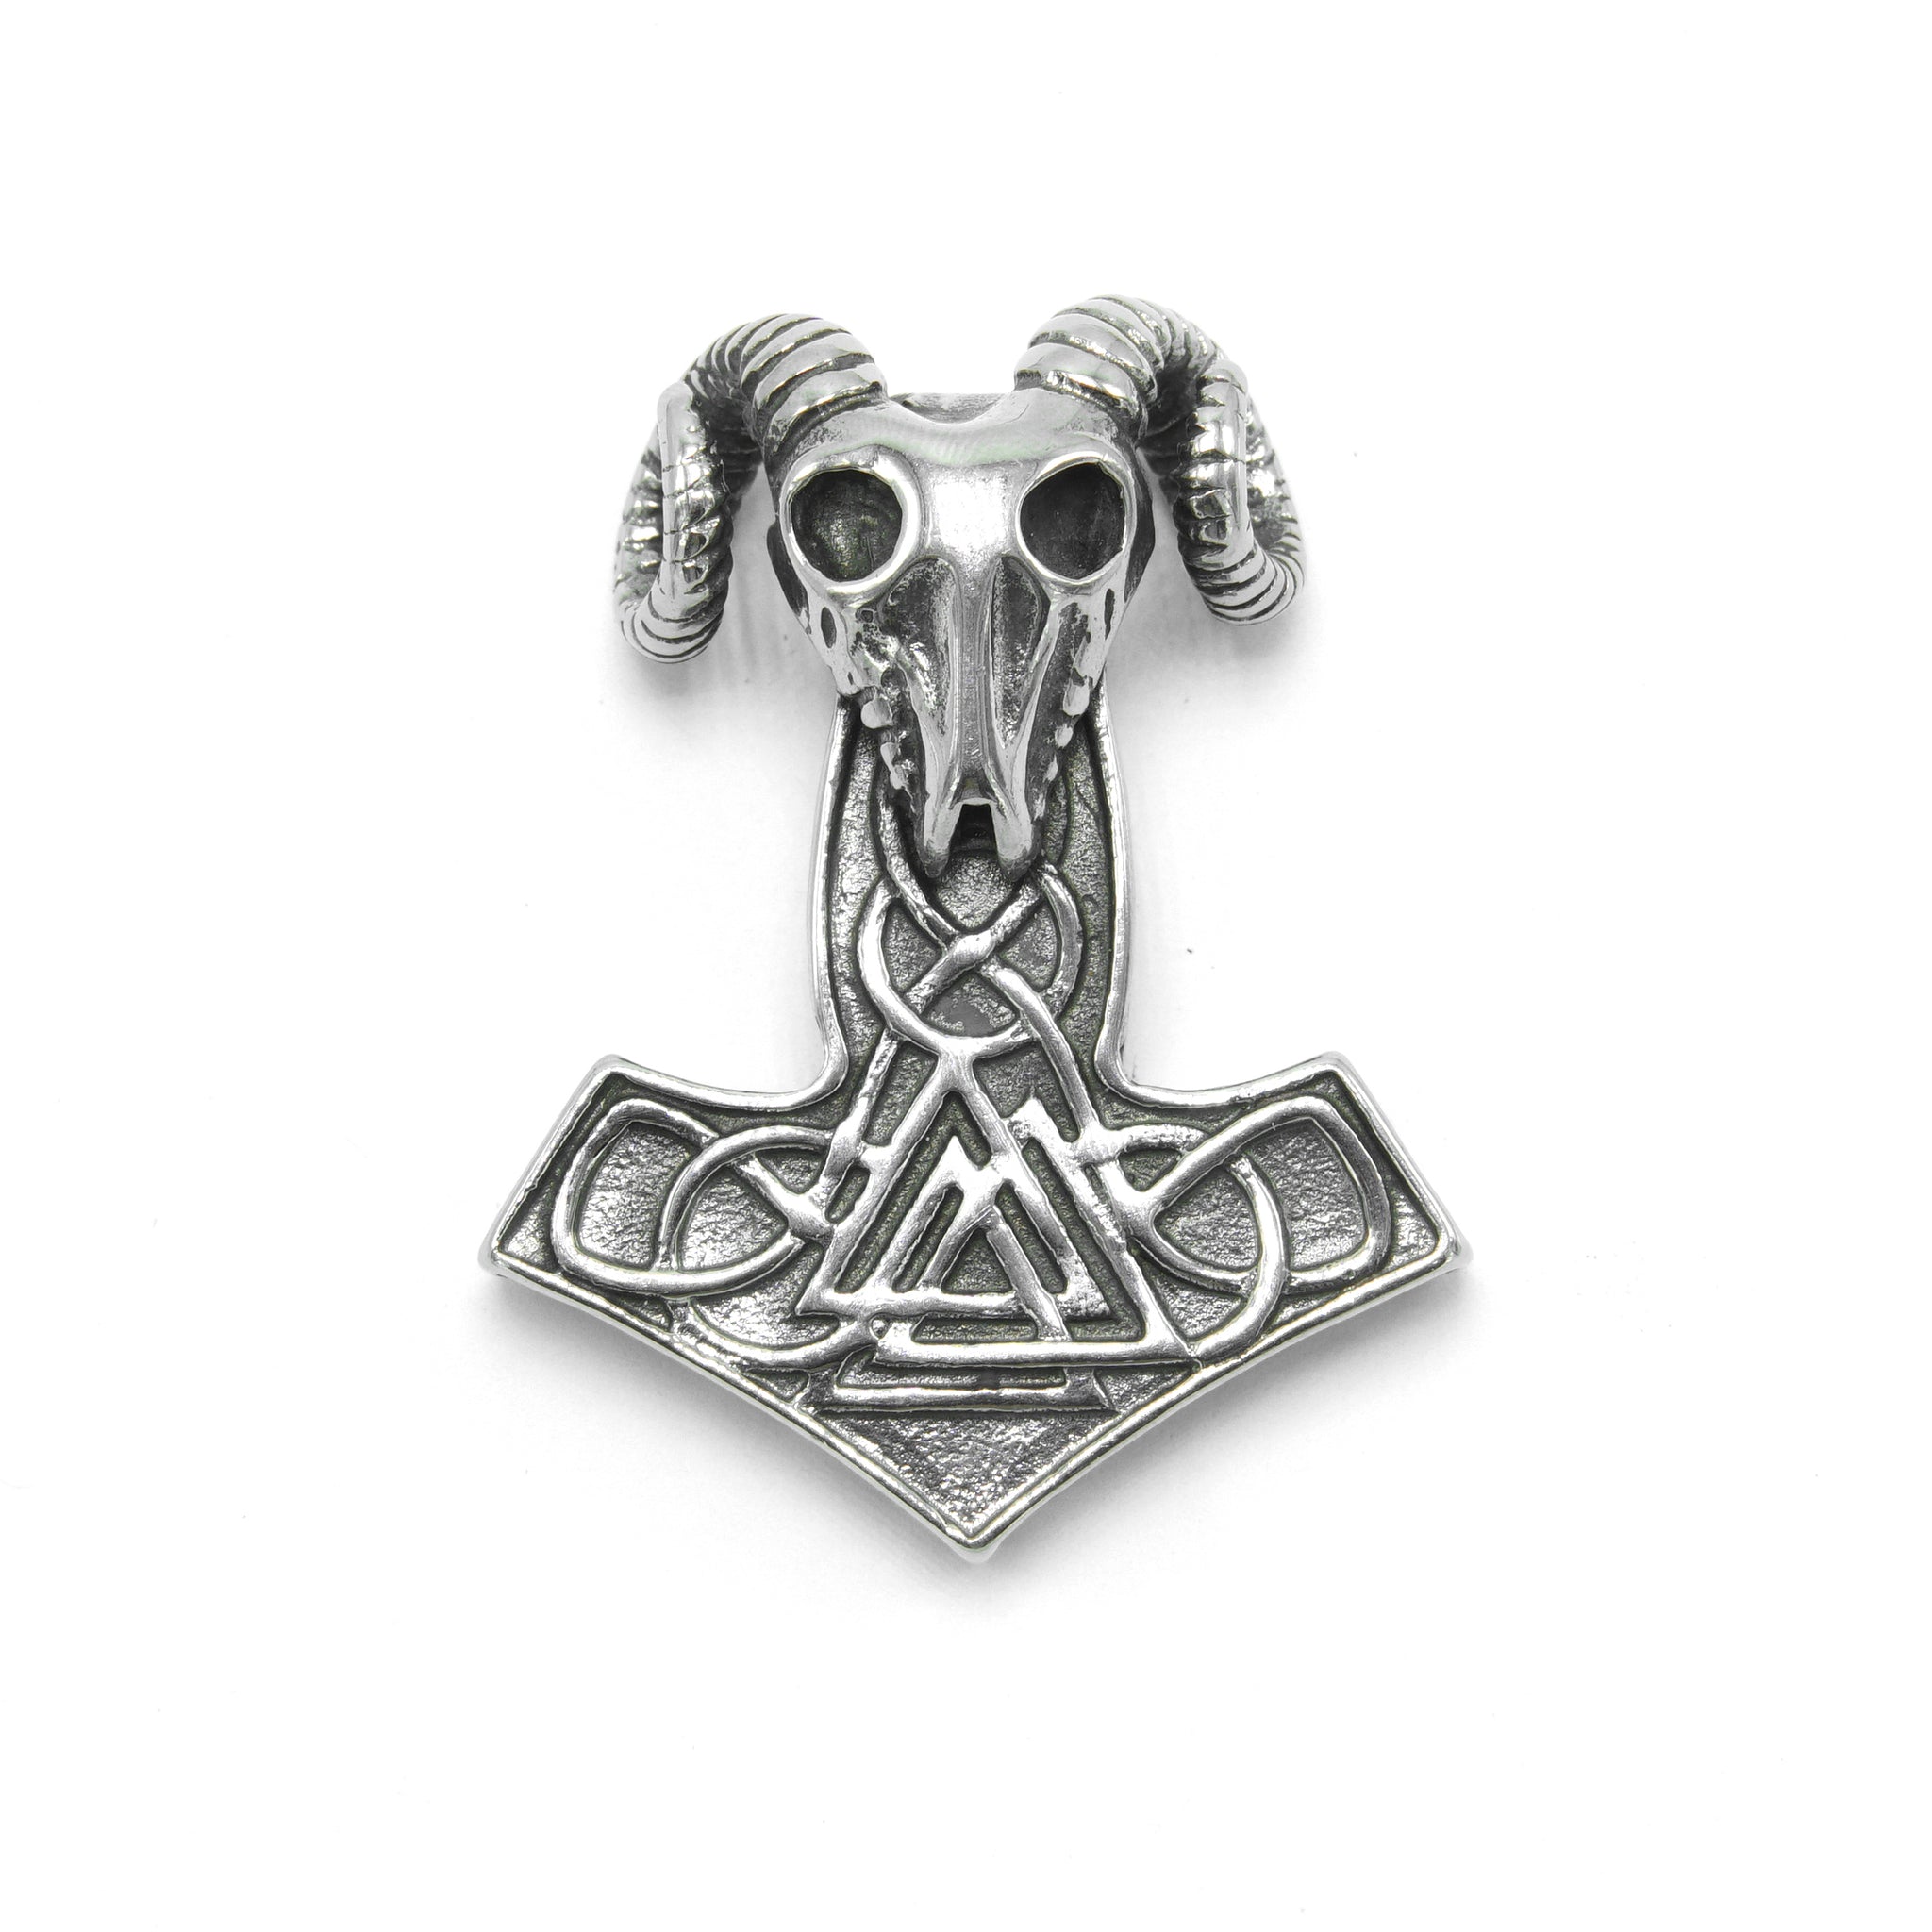 ENXICO Thor's Hammer Pendant with Valknut Symbol Necklace